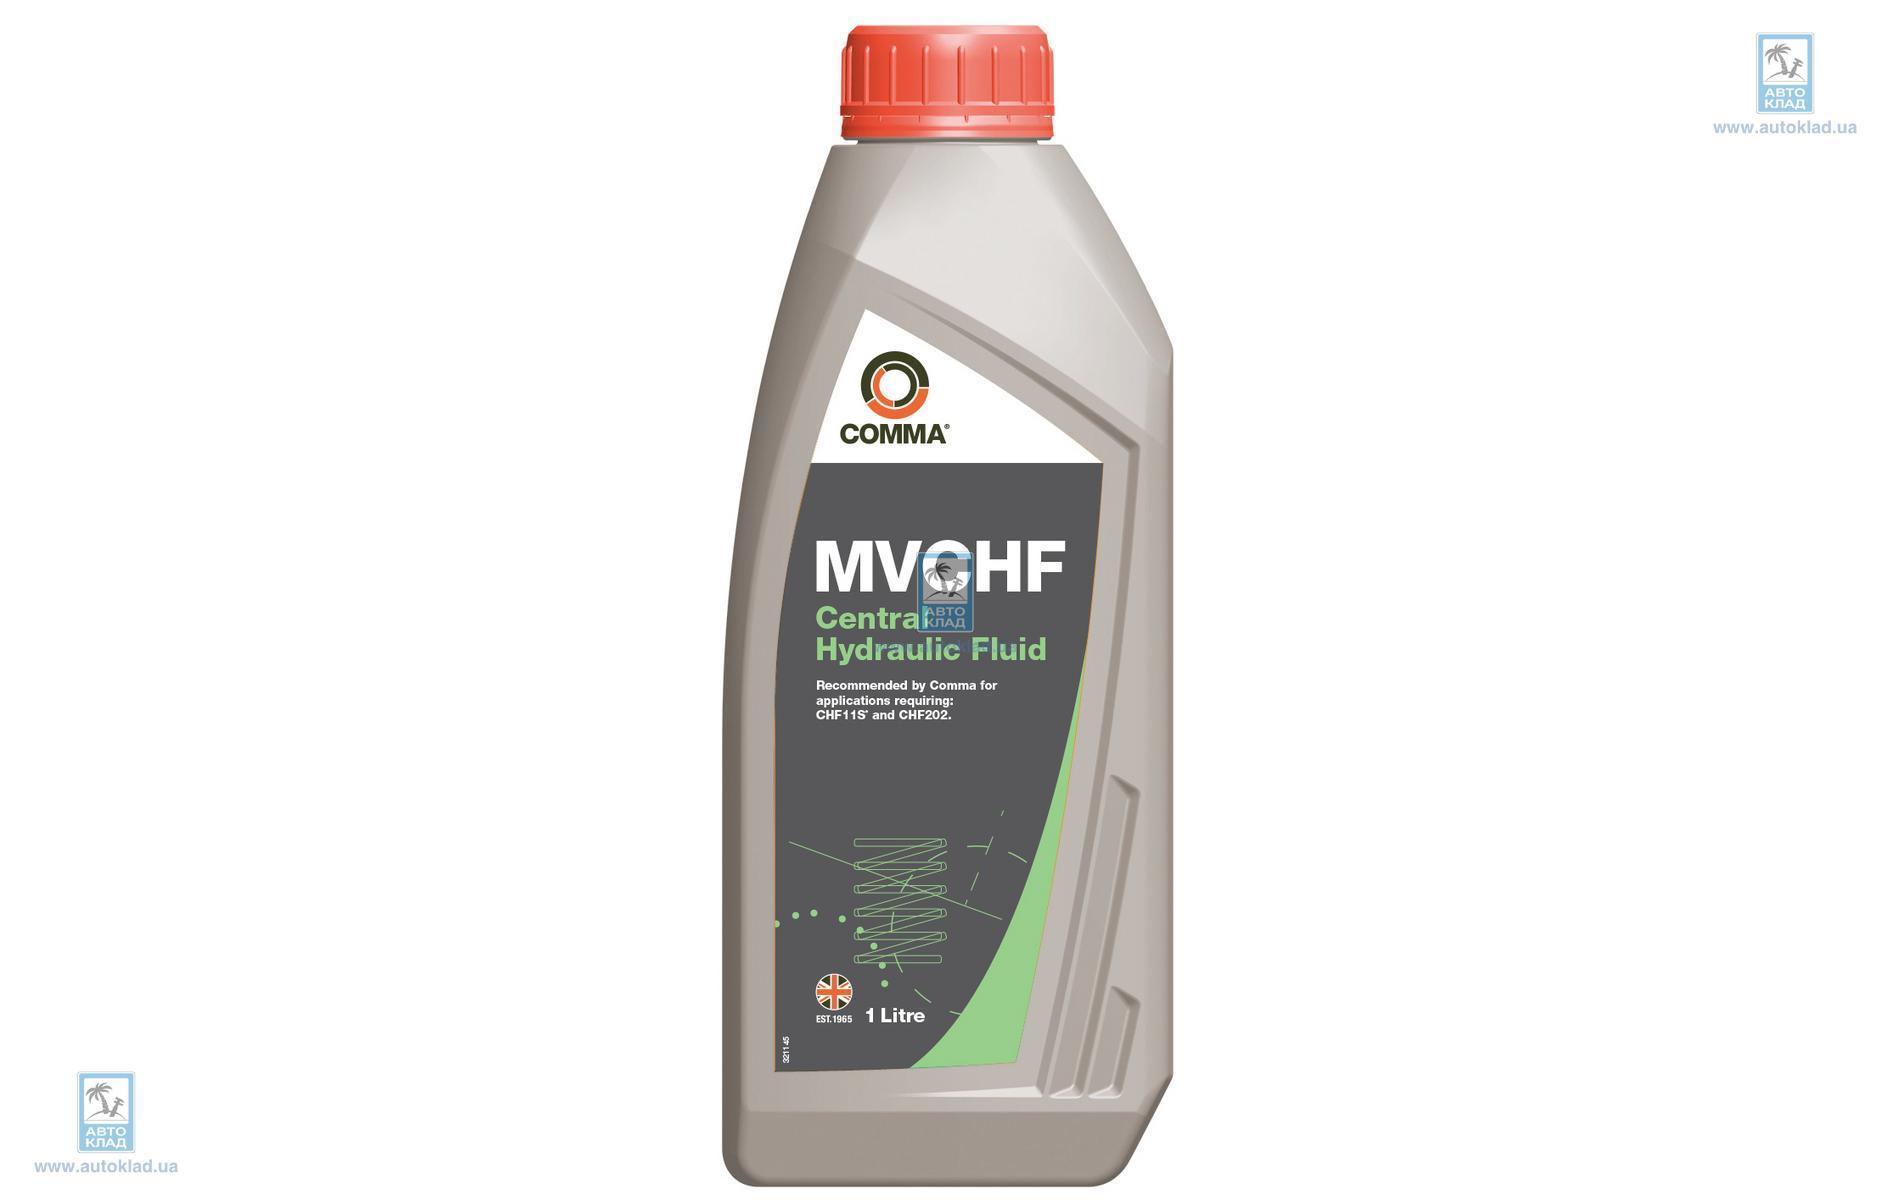 Олива гідравлічна MVCHF Central Hydraulic Fluid 1л COMMA MVCHF11SCENT1L